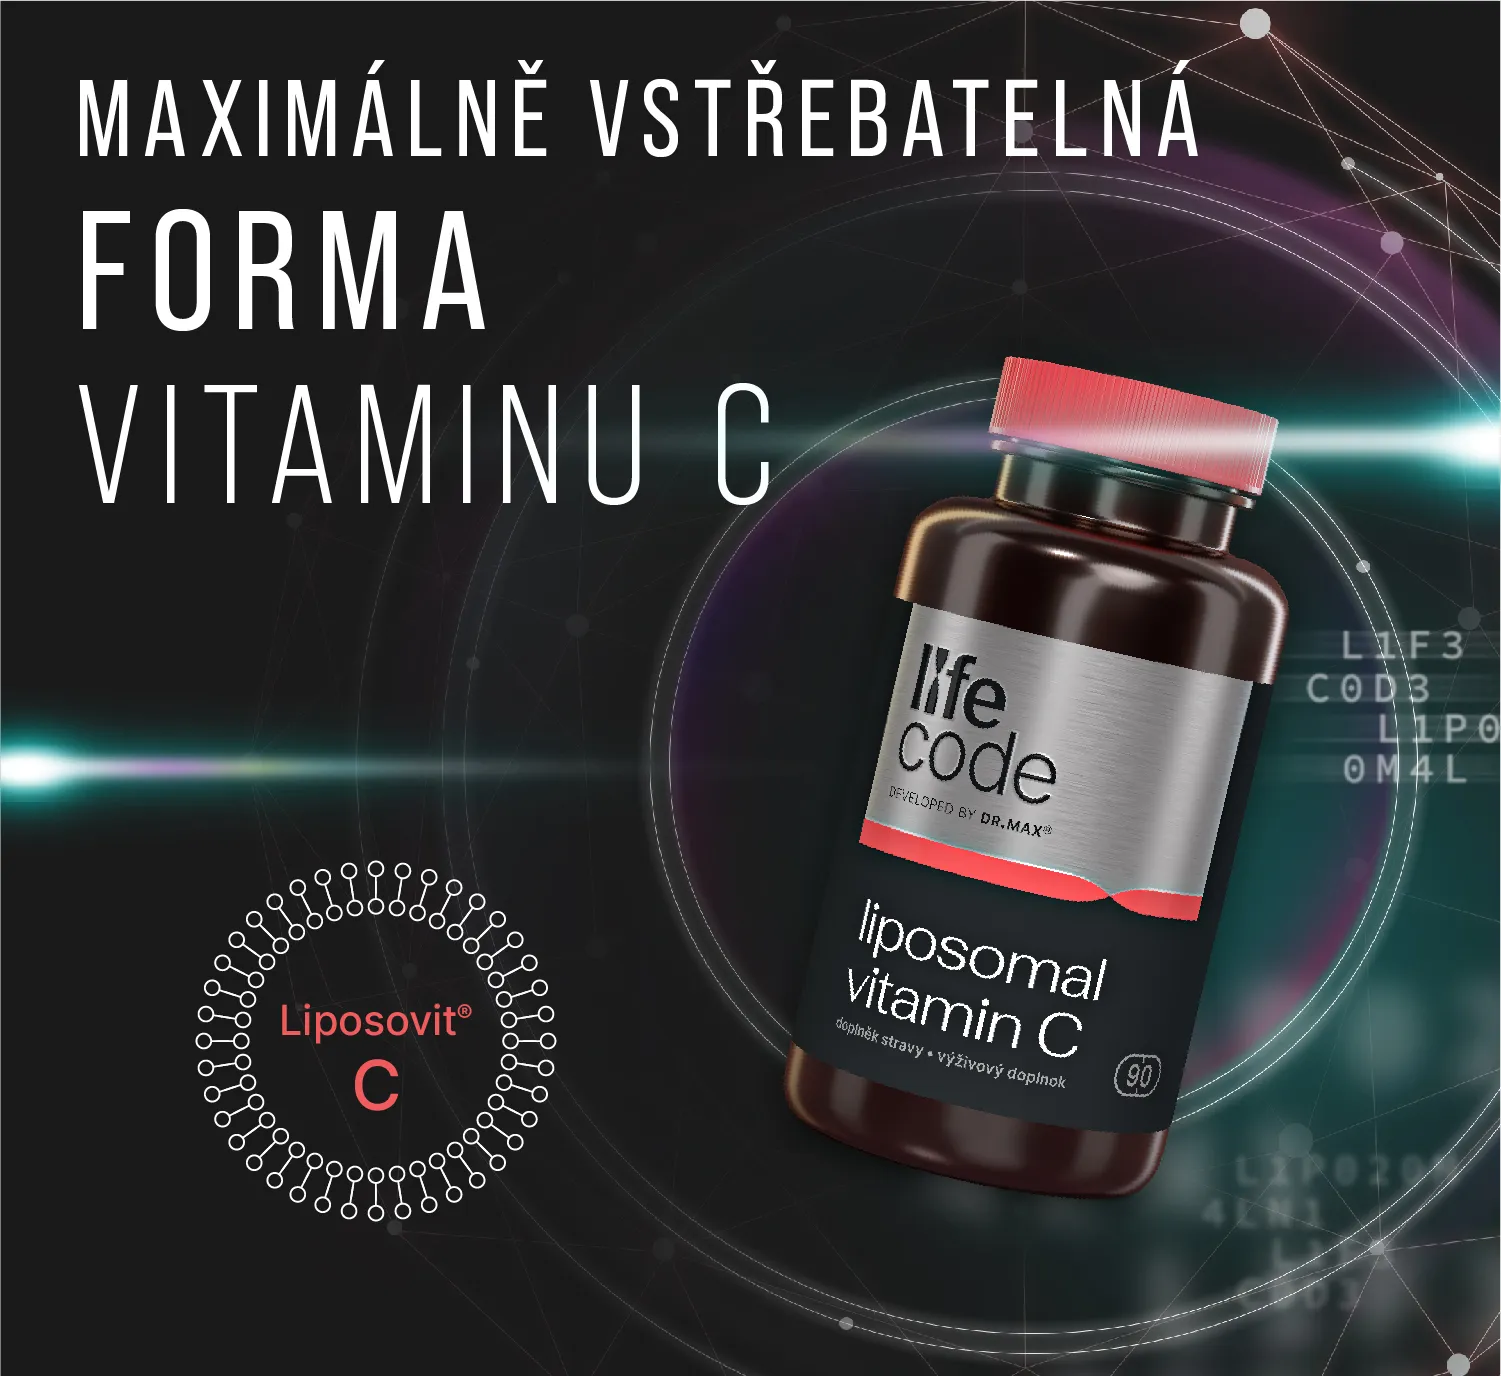 Dr. Max Life Code Liposomal Vitamin C – Maximálně vstřebatelná forma vitaminu C